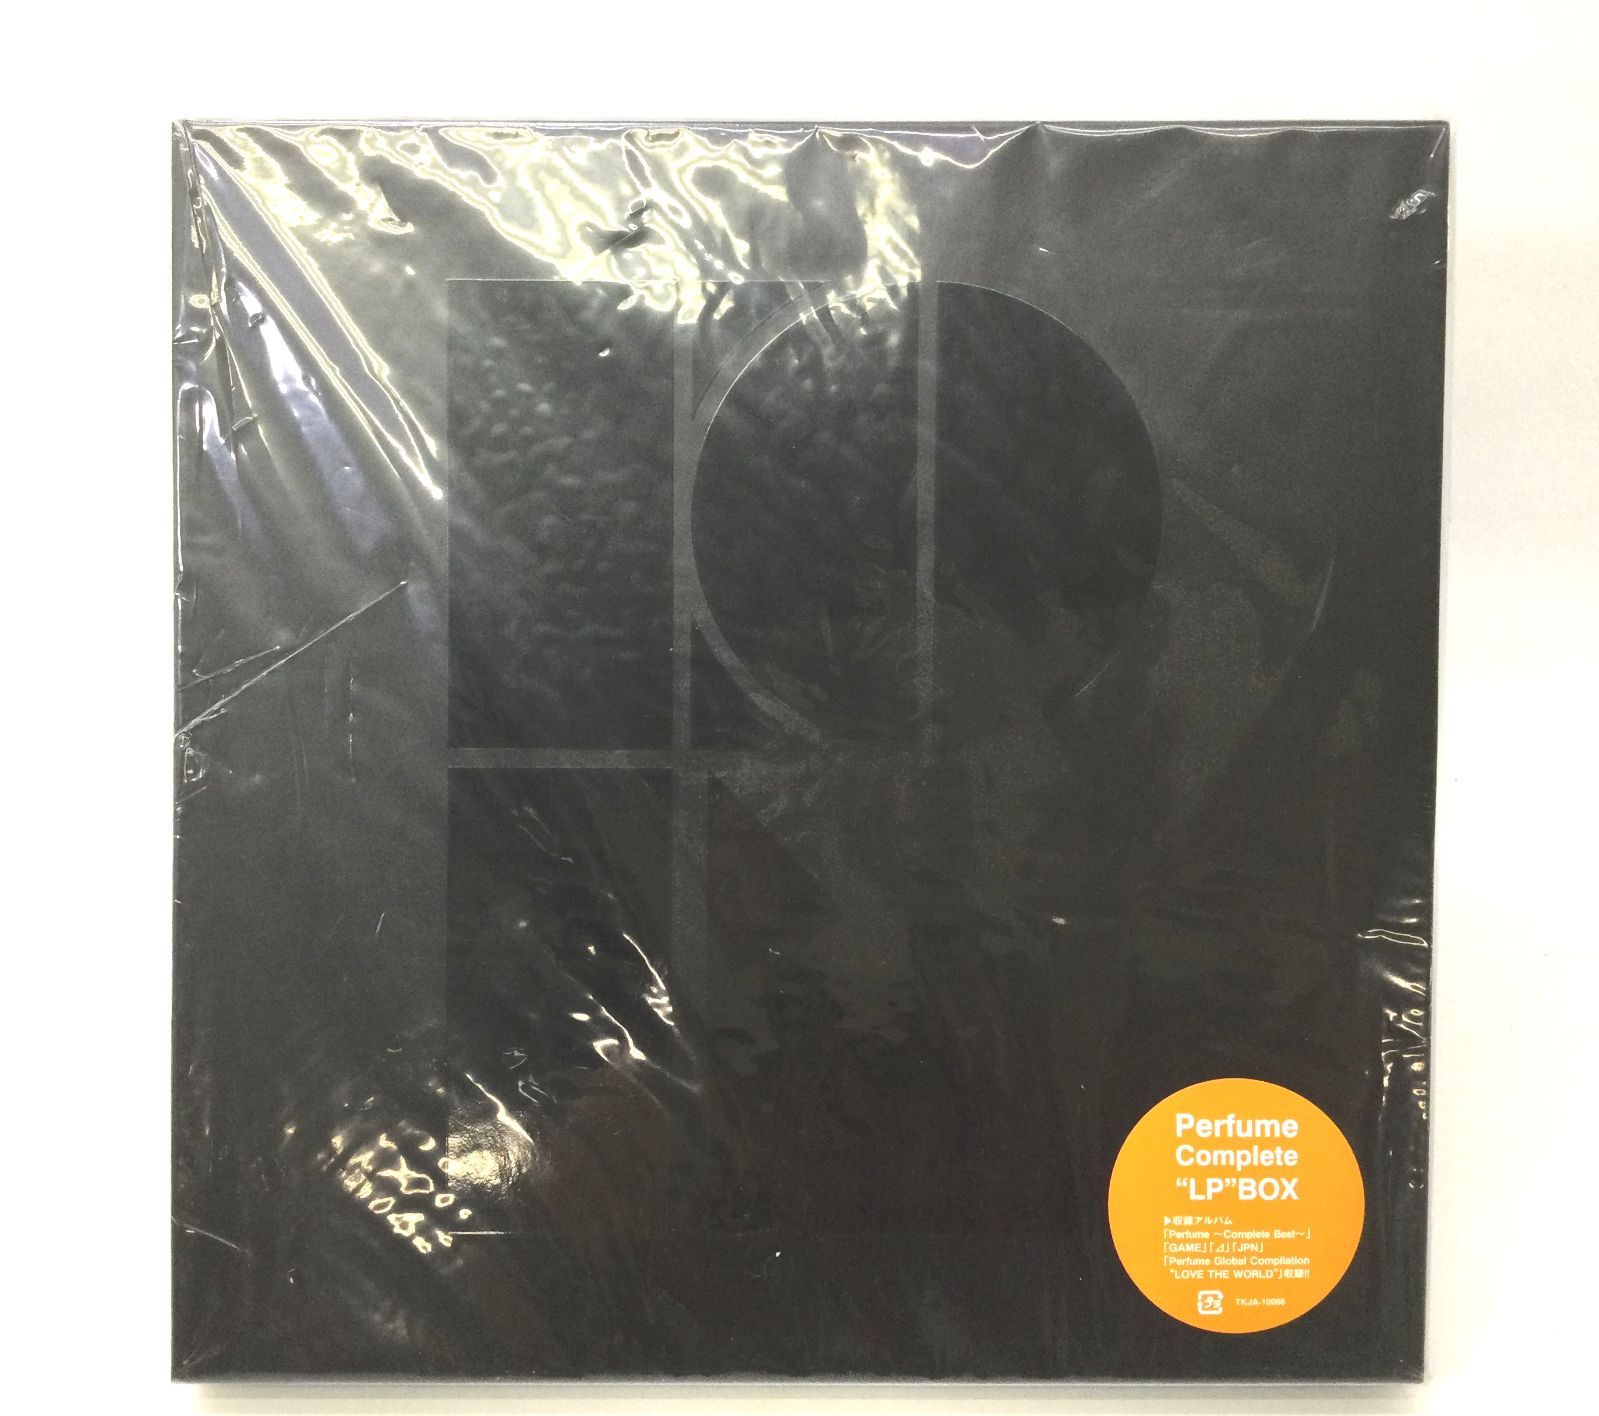 C0114】Perfume Complete LP BOX パフューム アナログ盤 レコード 完全